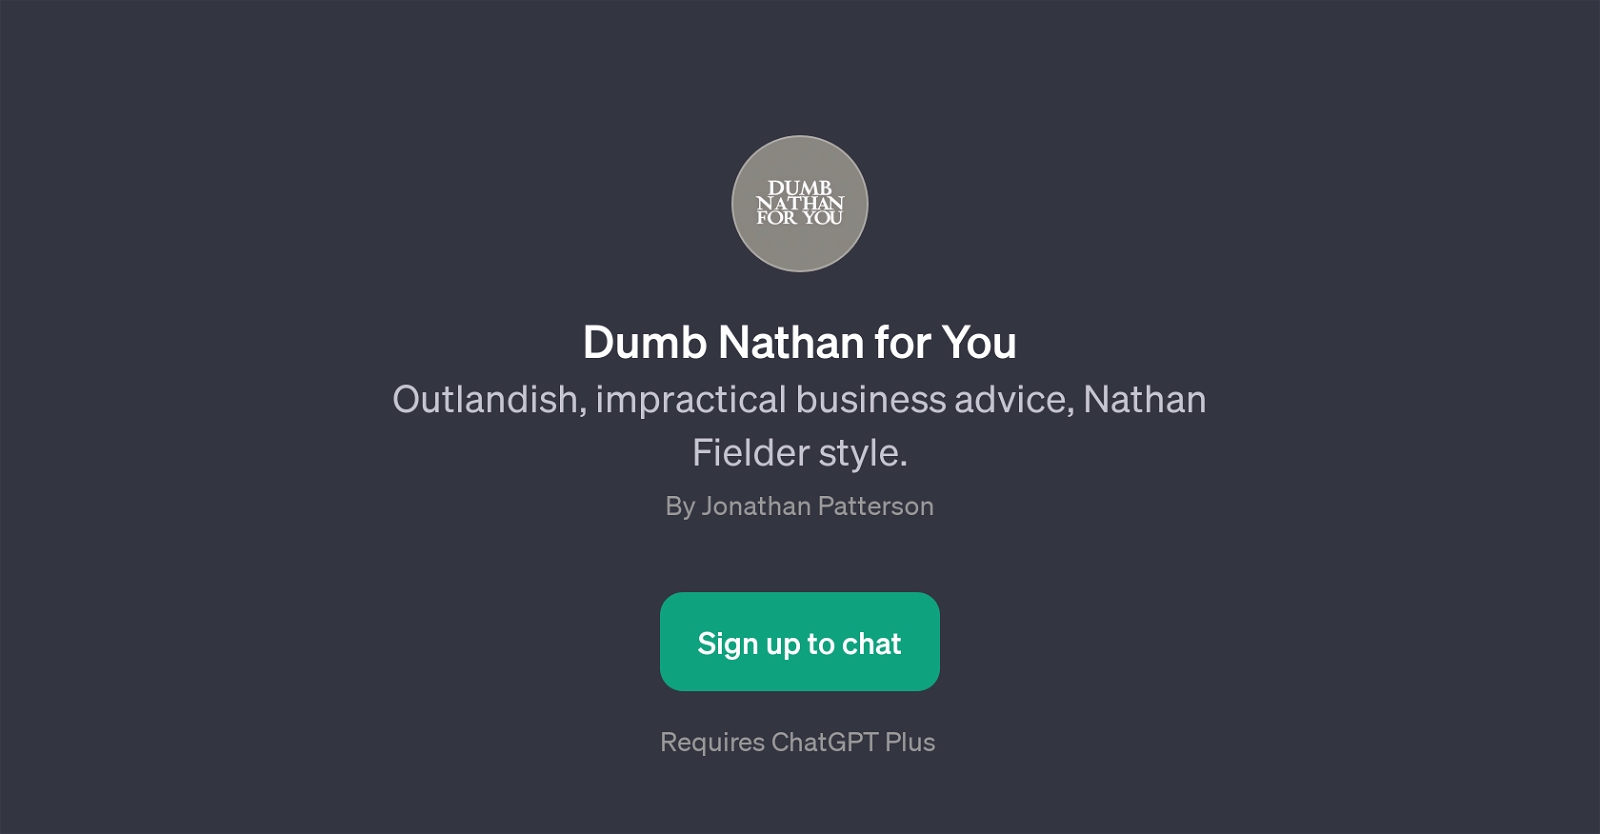 Dumb Nathan for You website